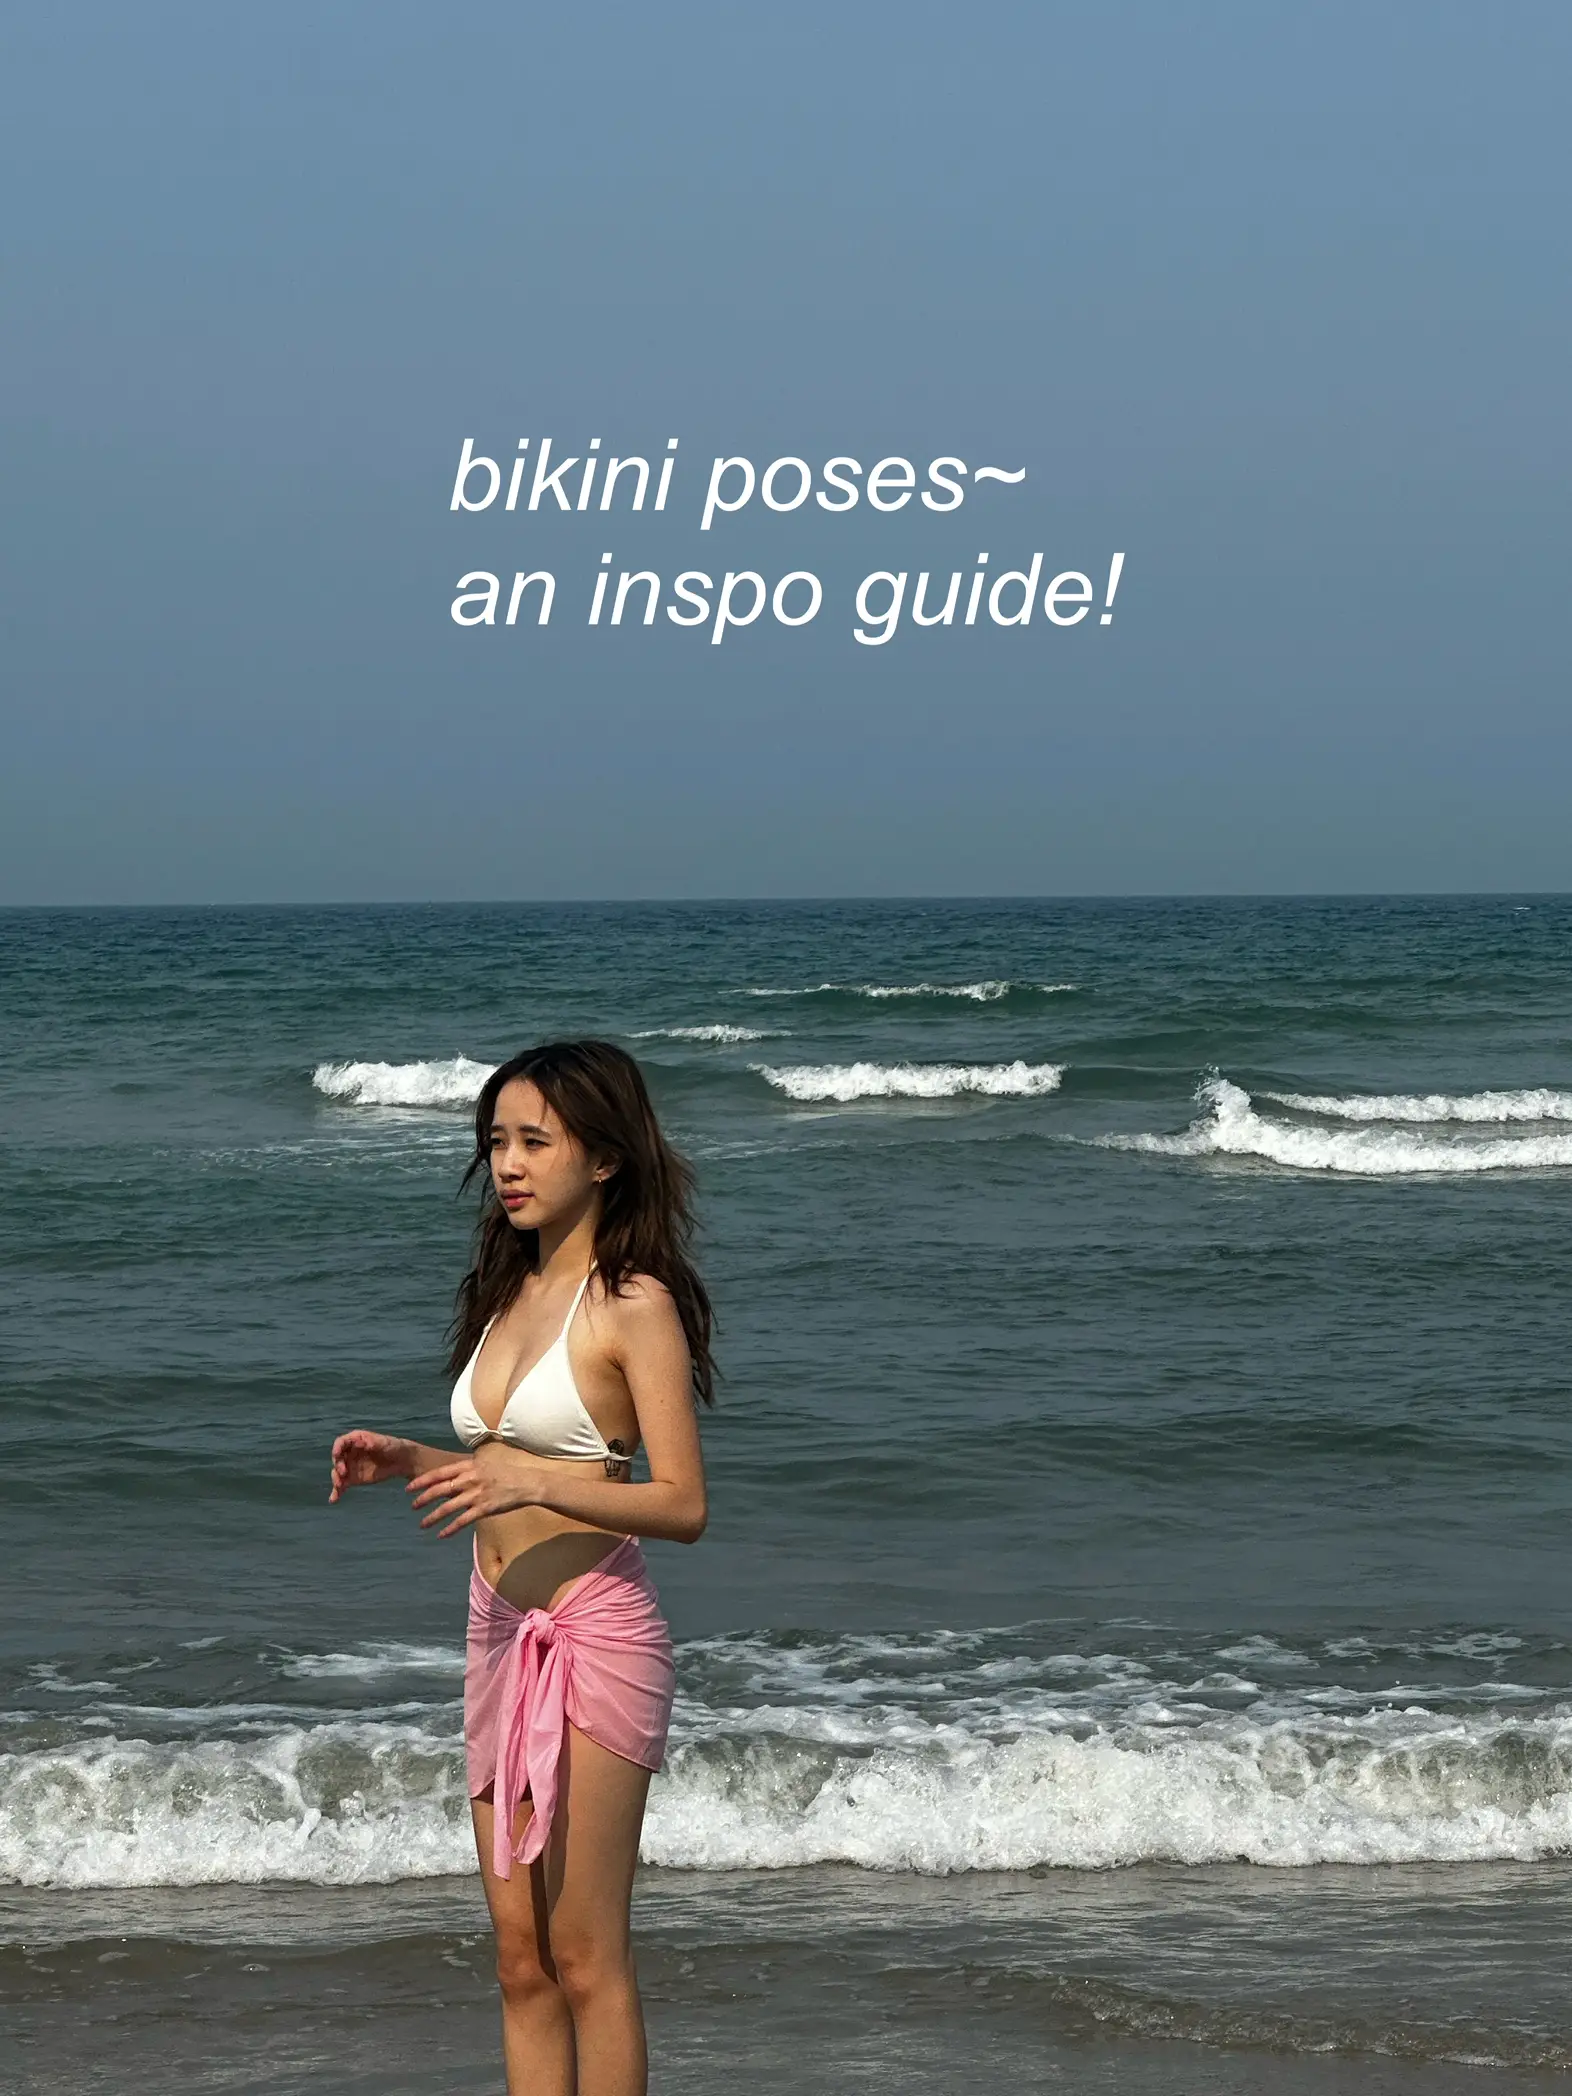 bikini poses 👙🌊💗's images(0)